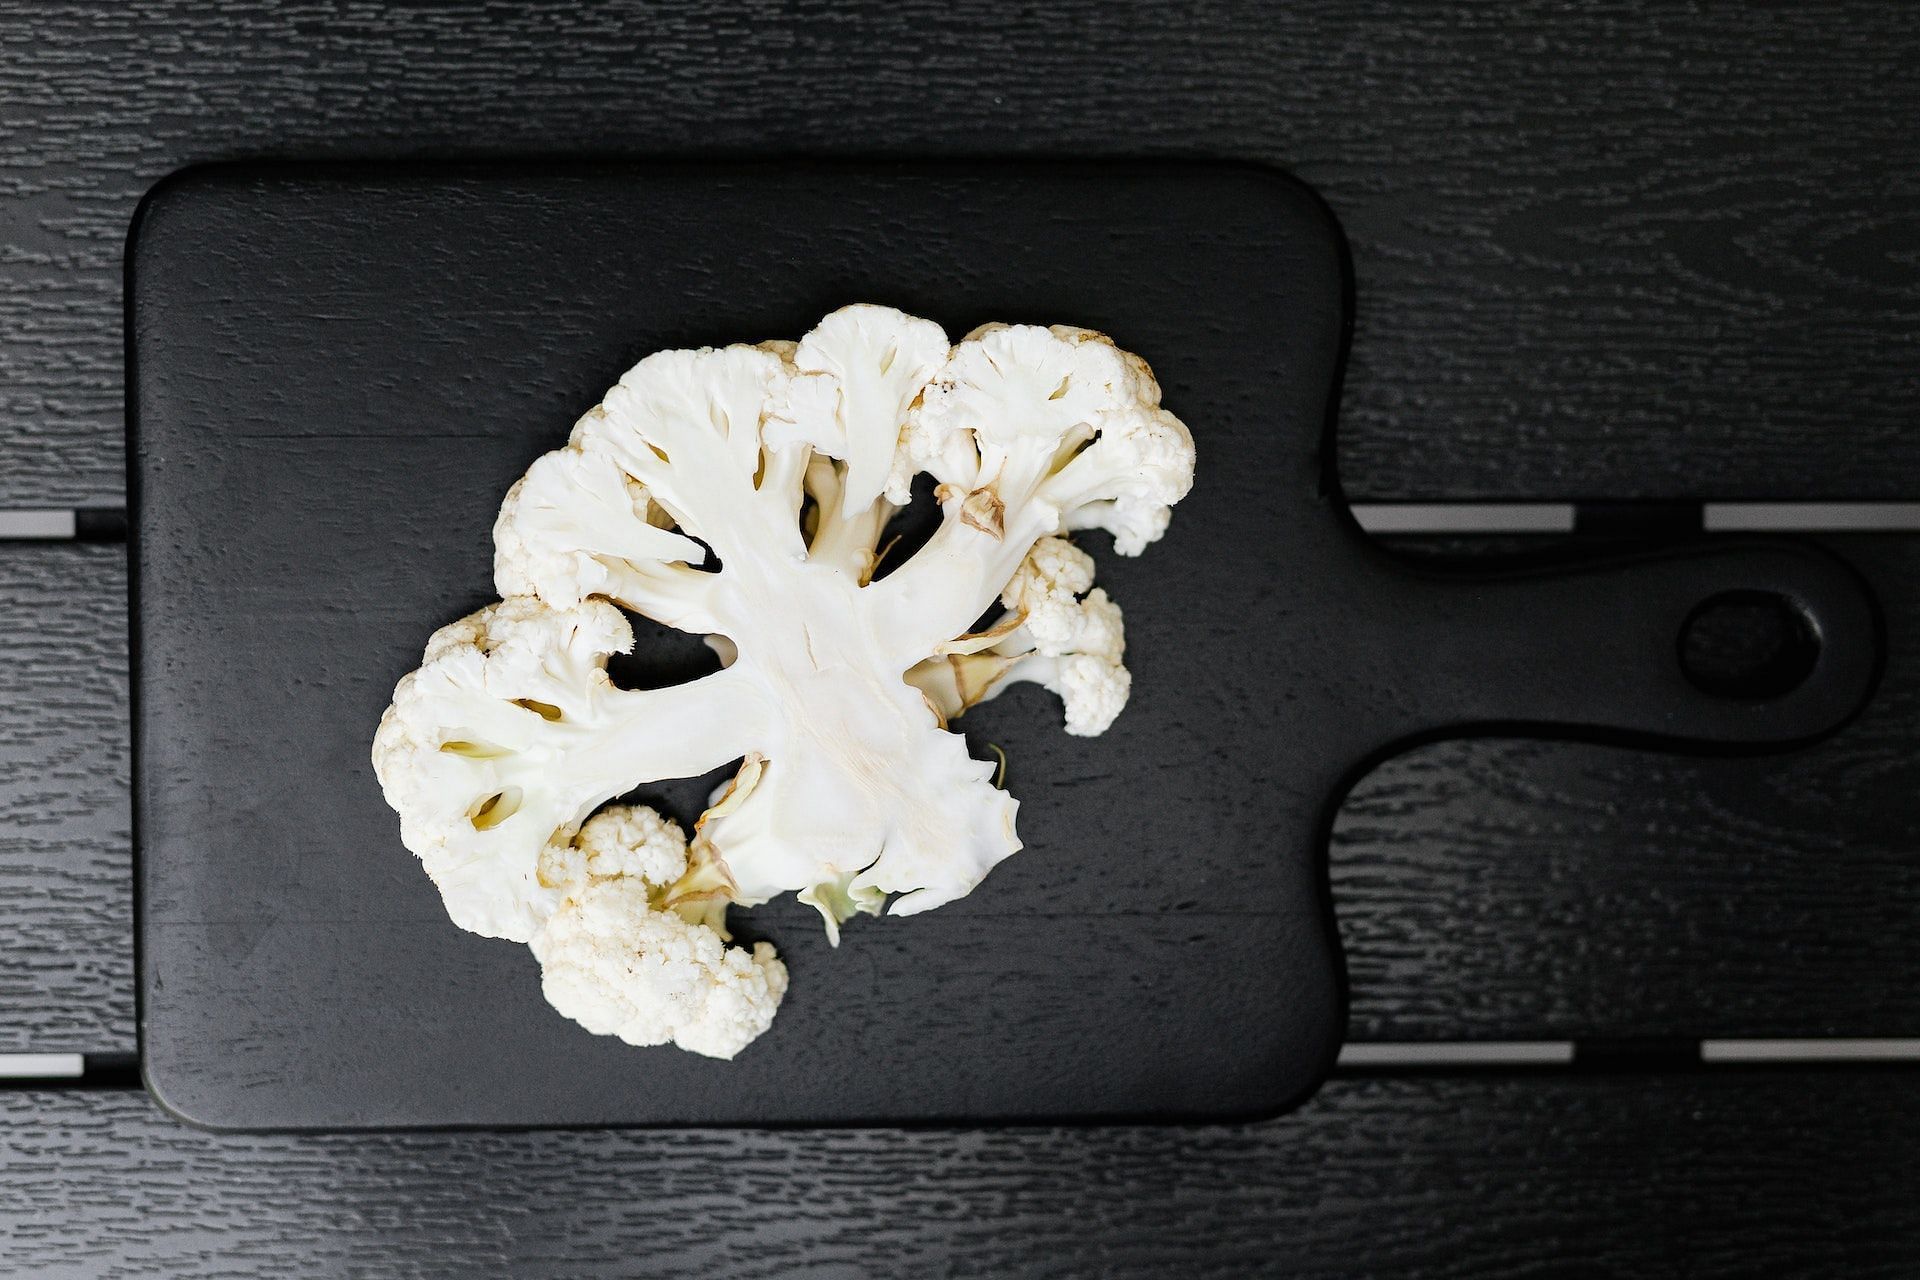 Cauliflower boosts immune system. (Photo via Pexels/Karolina Grabowska)